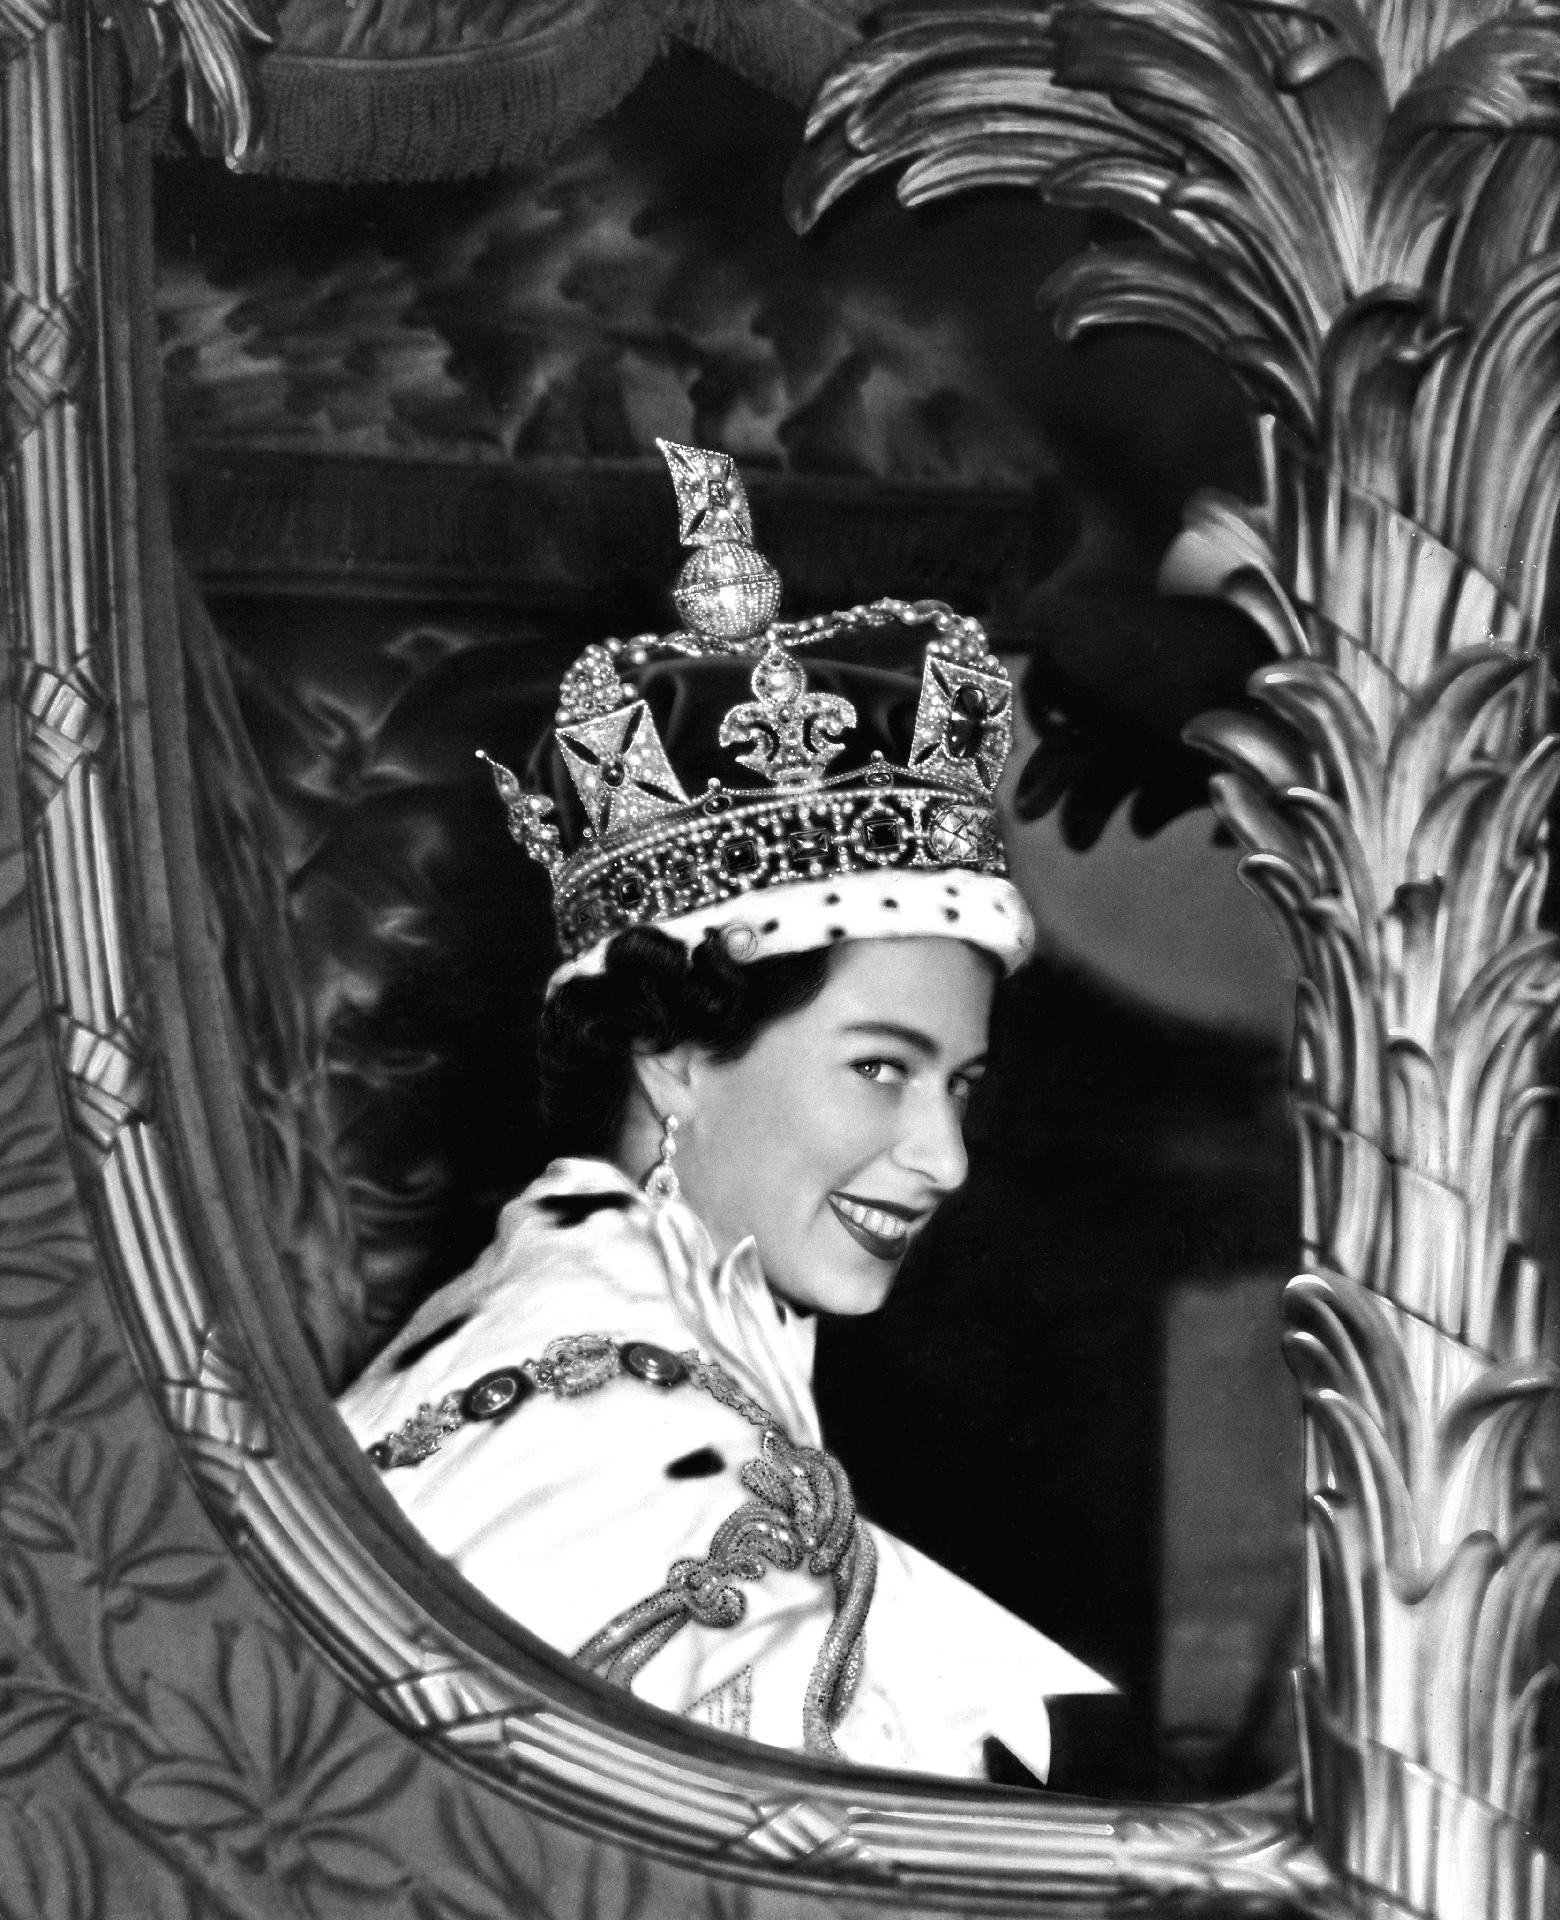 Queen Elizabeth II at her coronation on June 2, 1953 - Getty Images